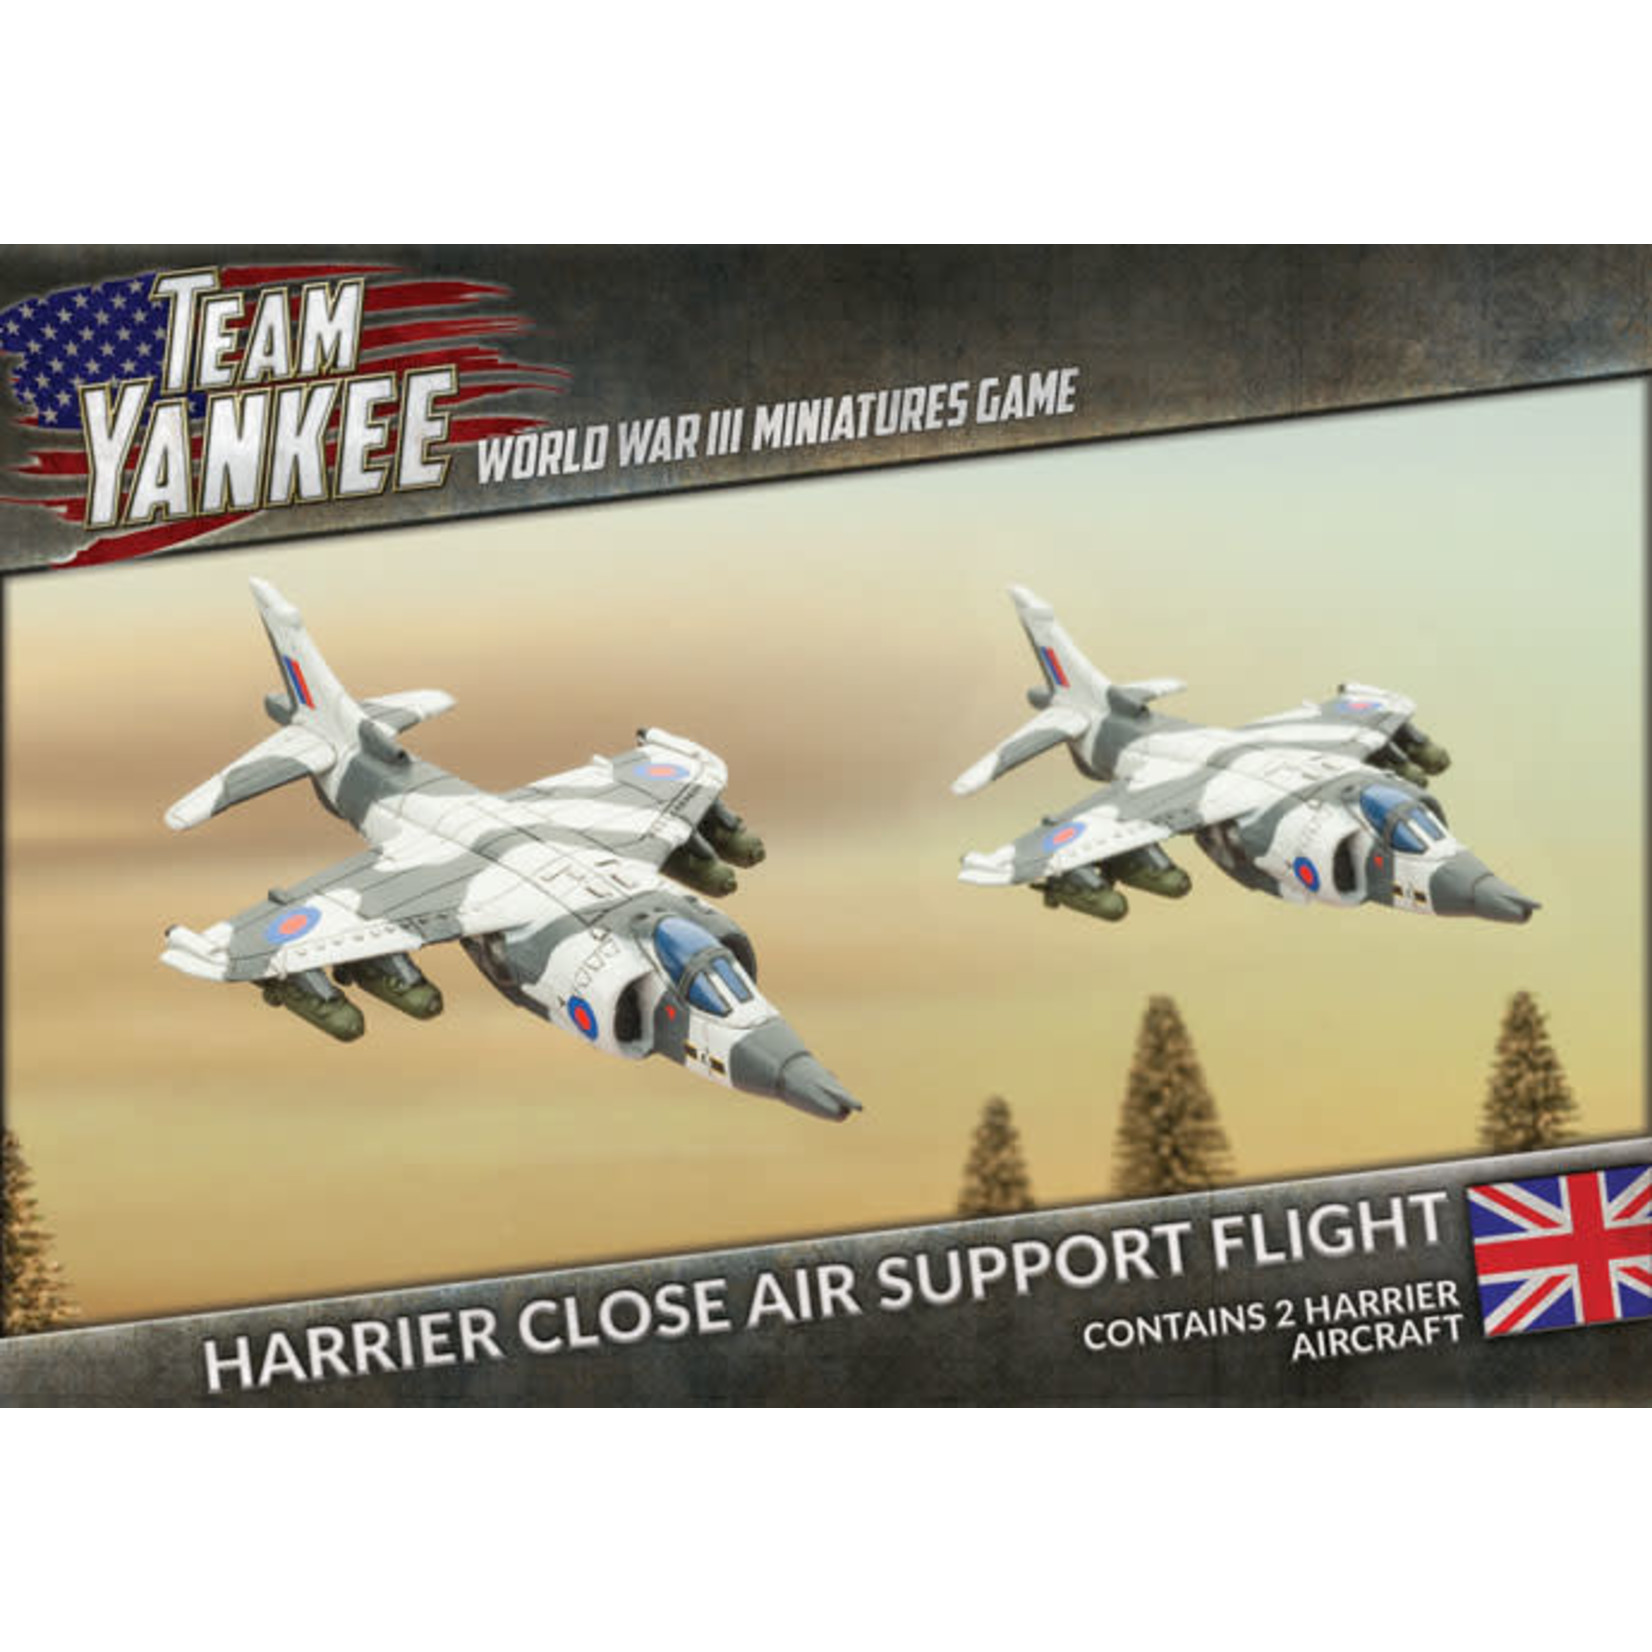 Battlefront Miniatures Harrier Close Air Support Flight (British)